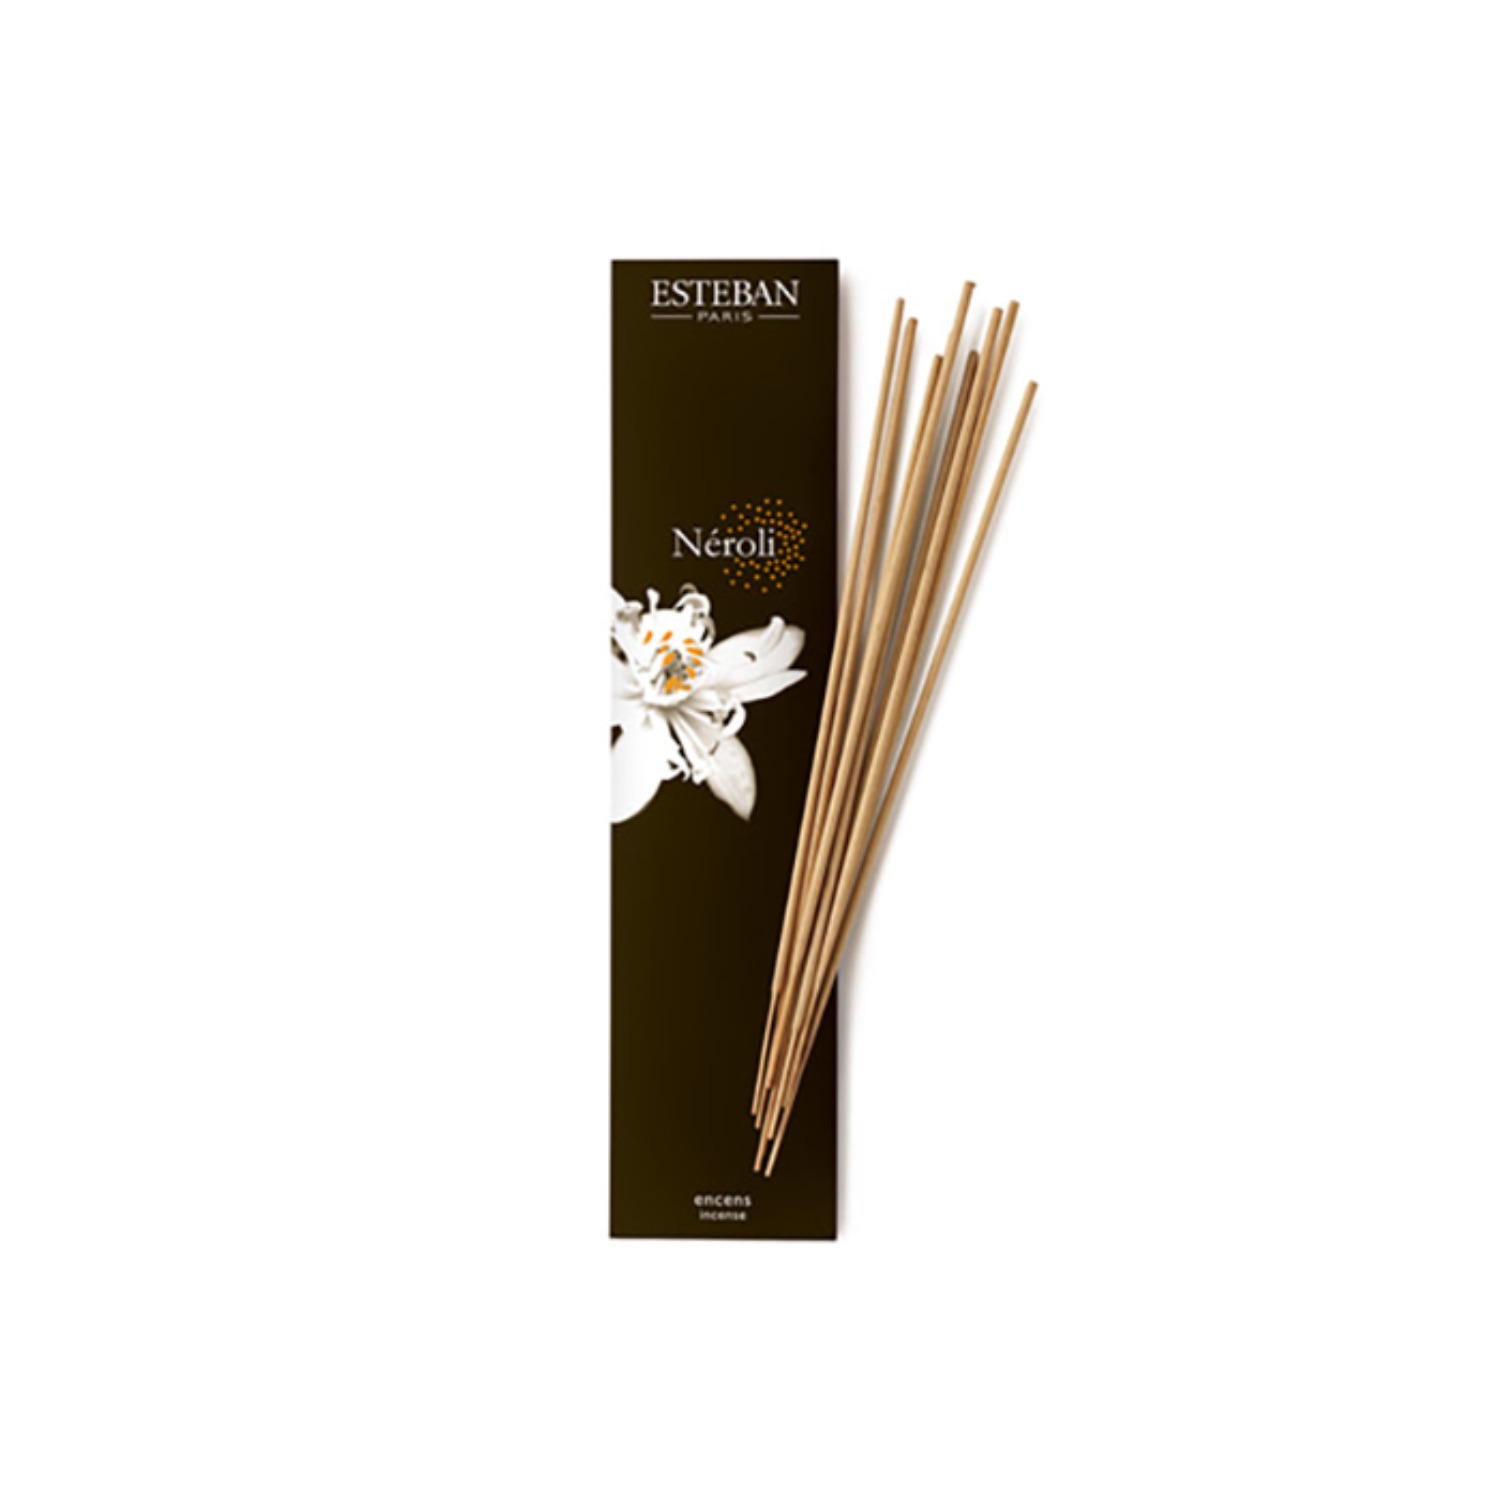 esteban neroli bamboo incense stick